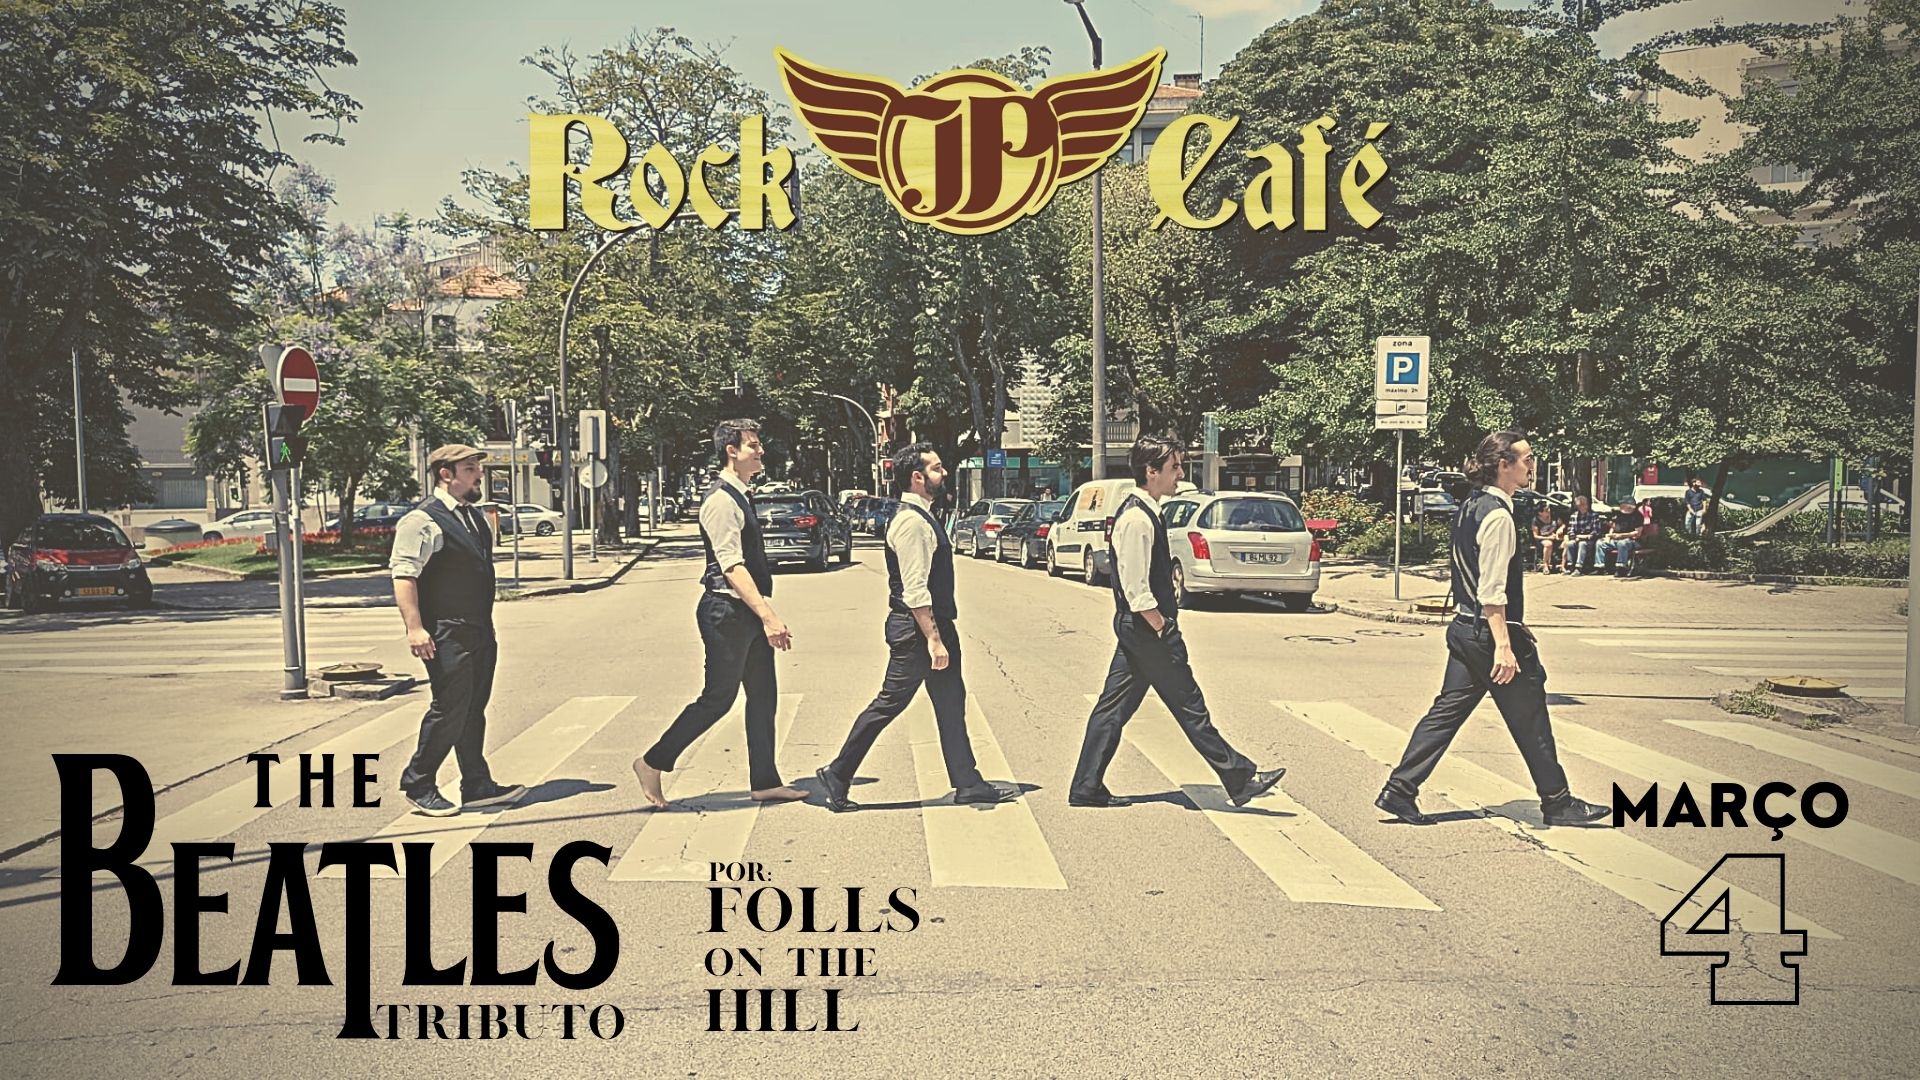 The Beatles Tributo @ JP Rock Café